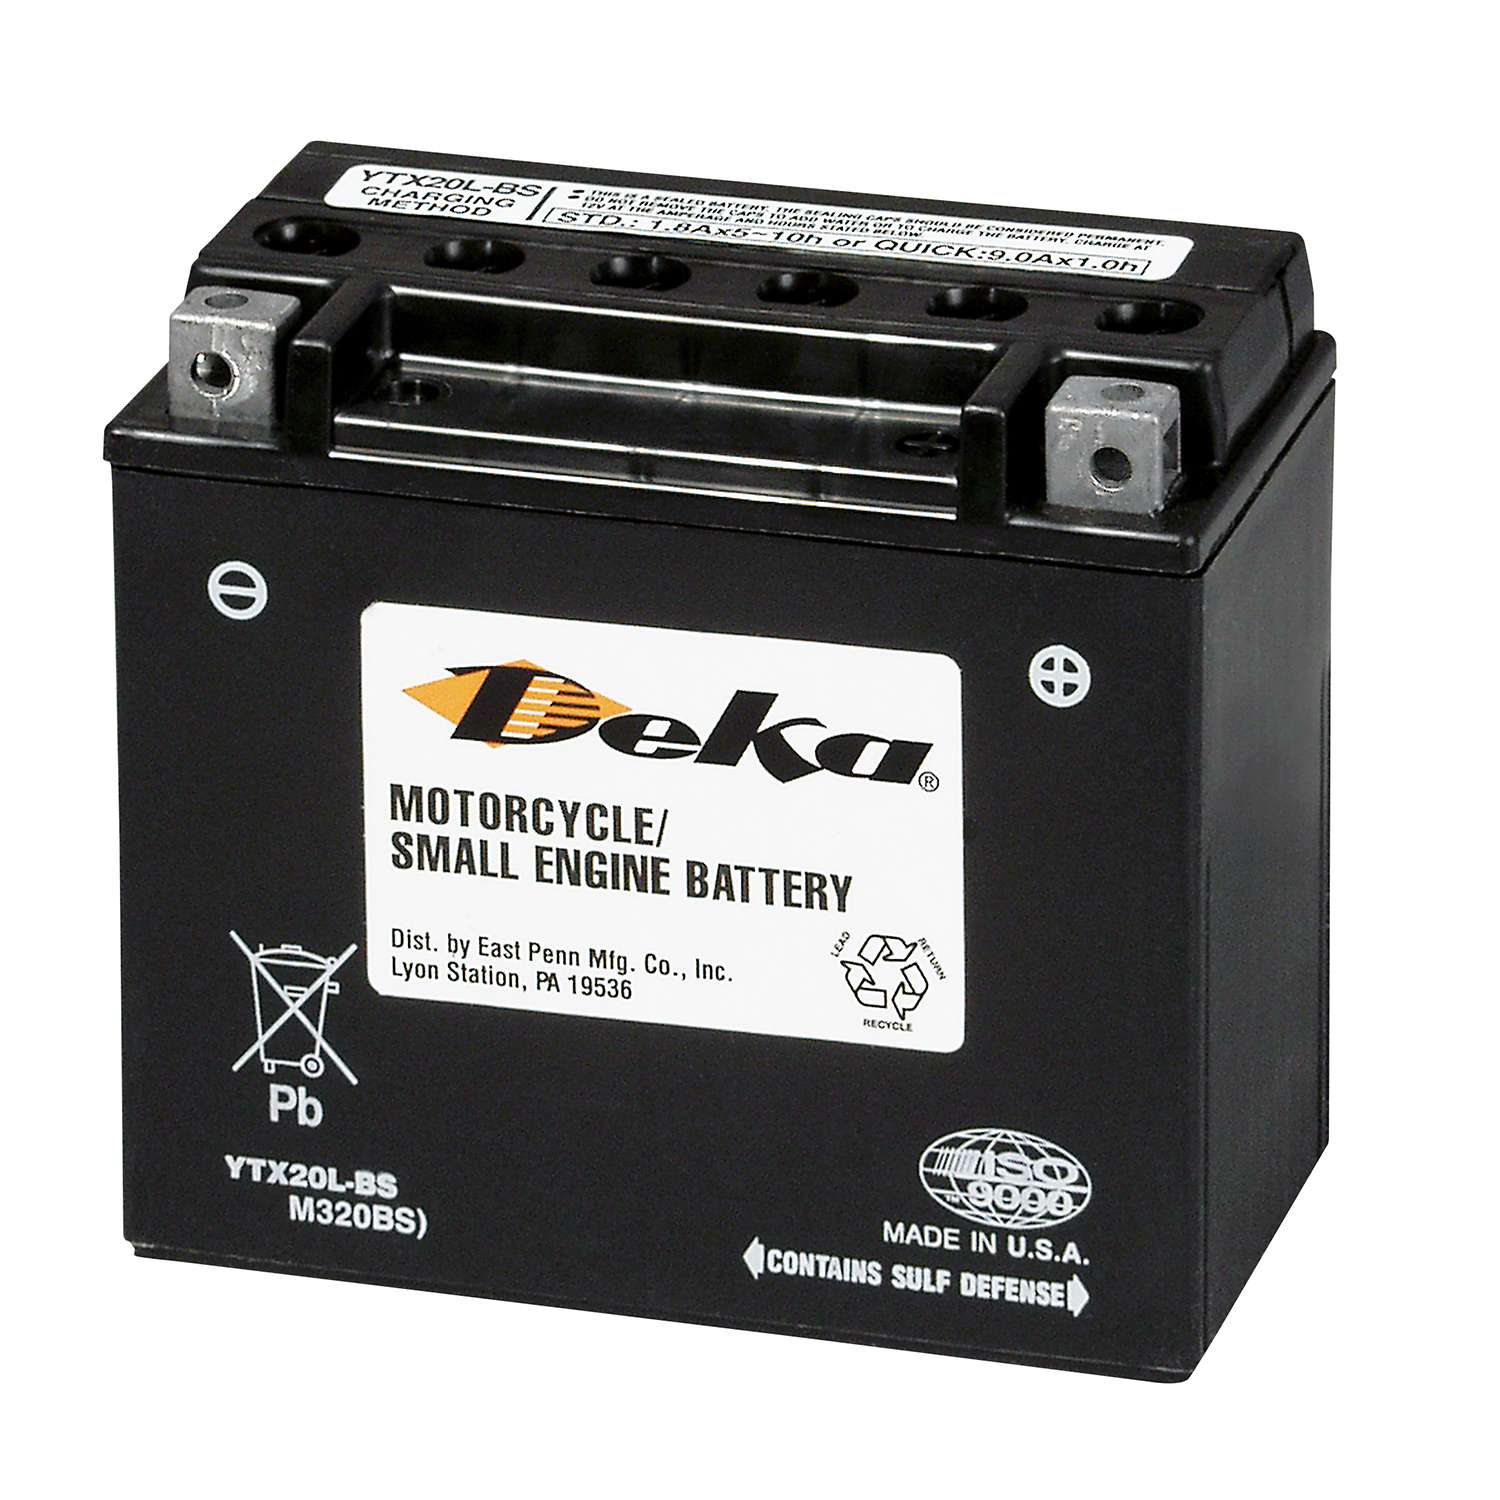 Deka Standard 12 V Motorcycle/Small Engine Battery Ace Hardware